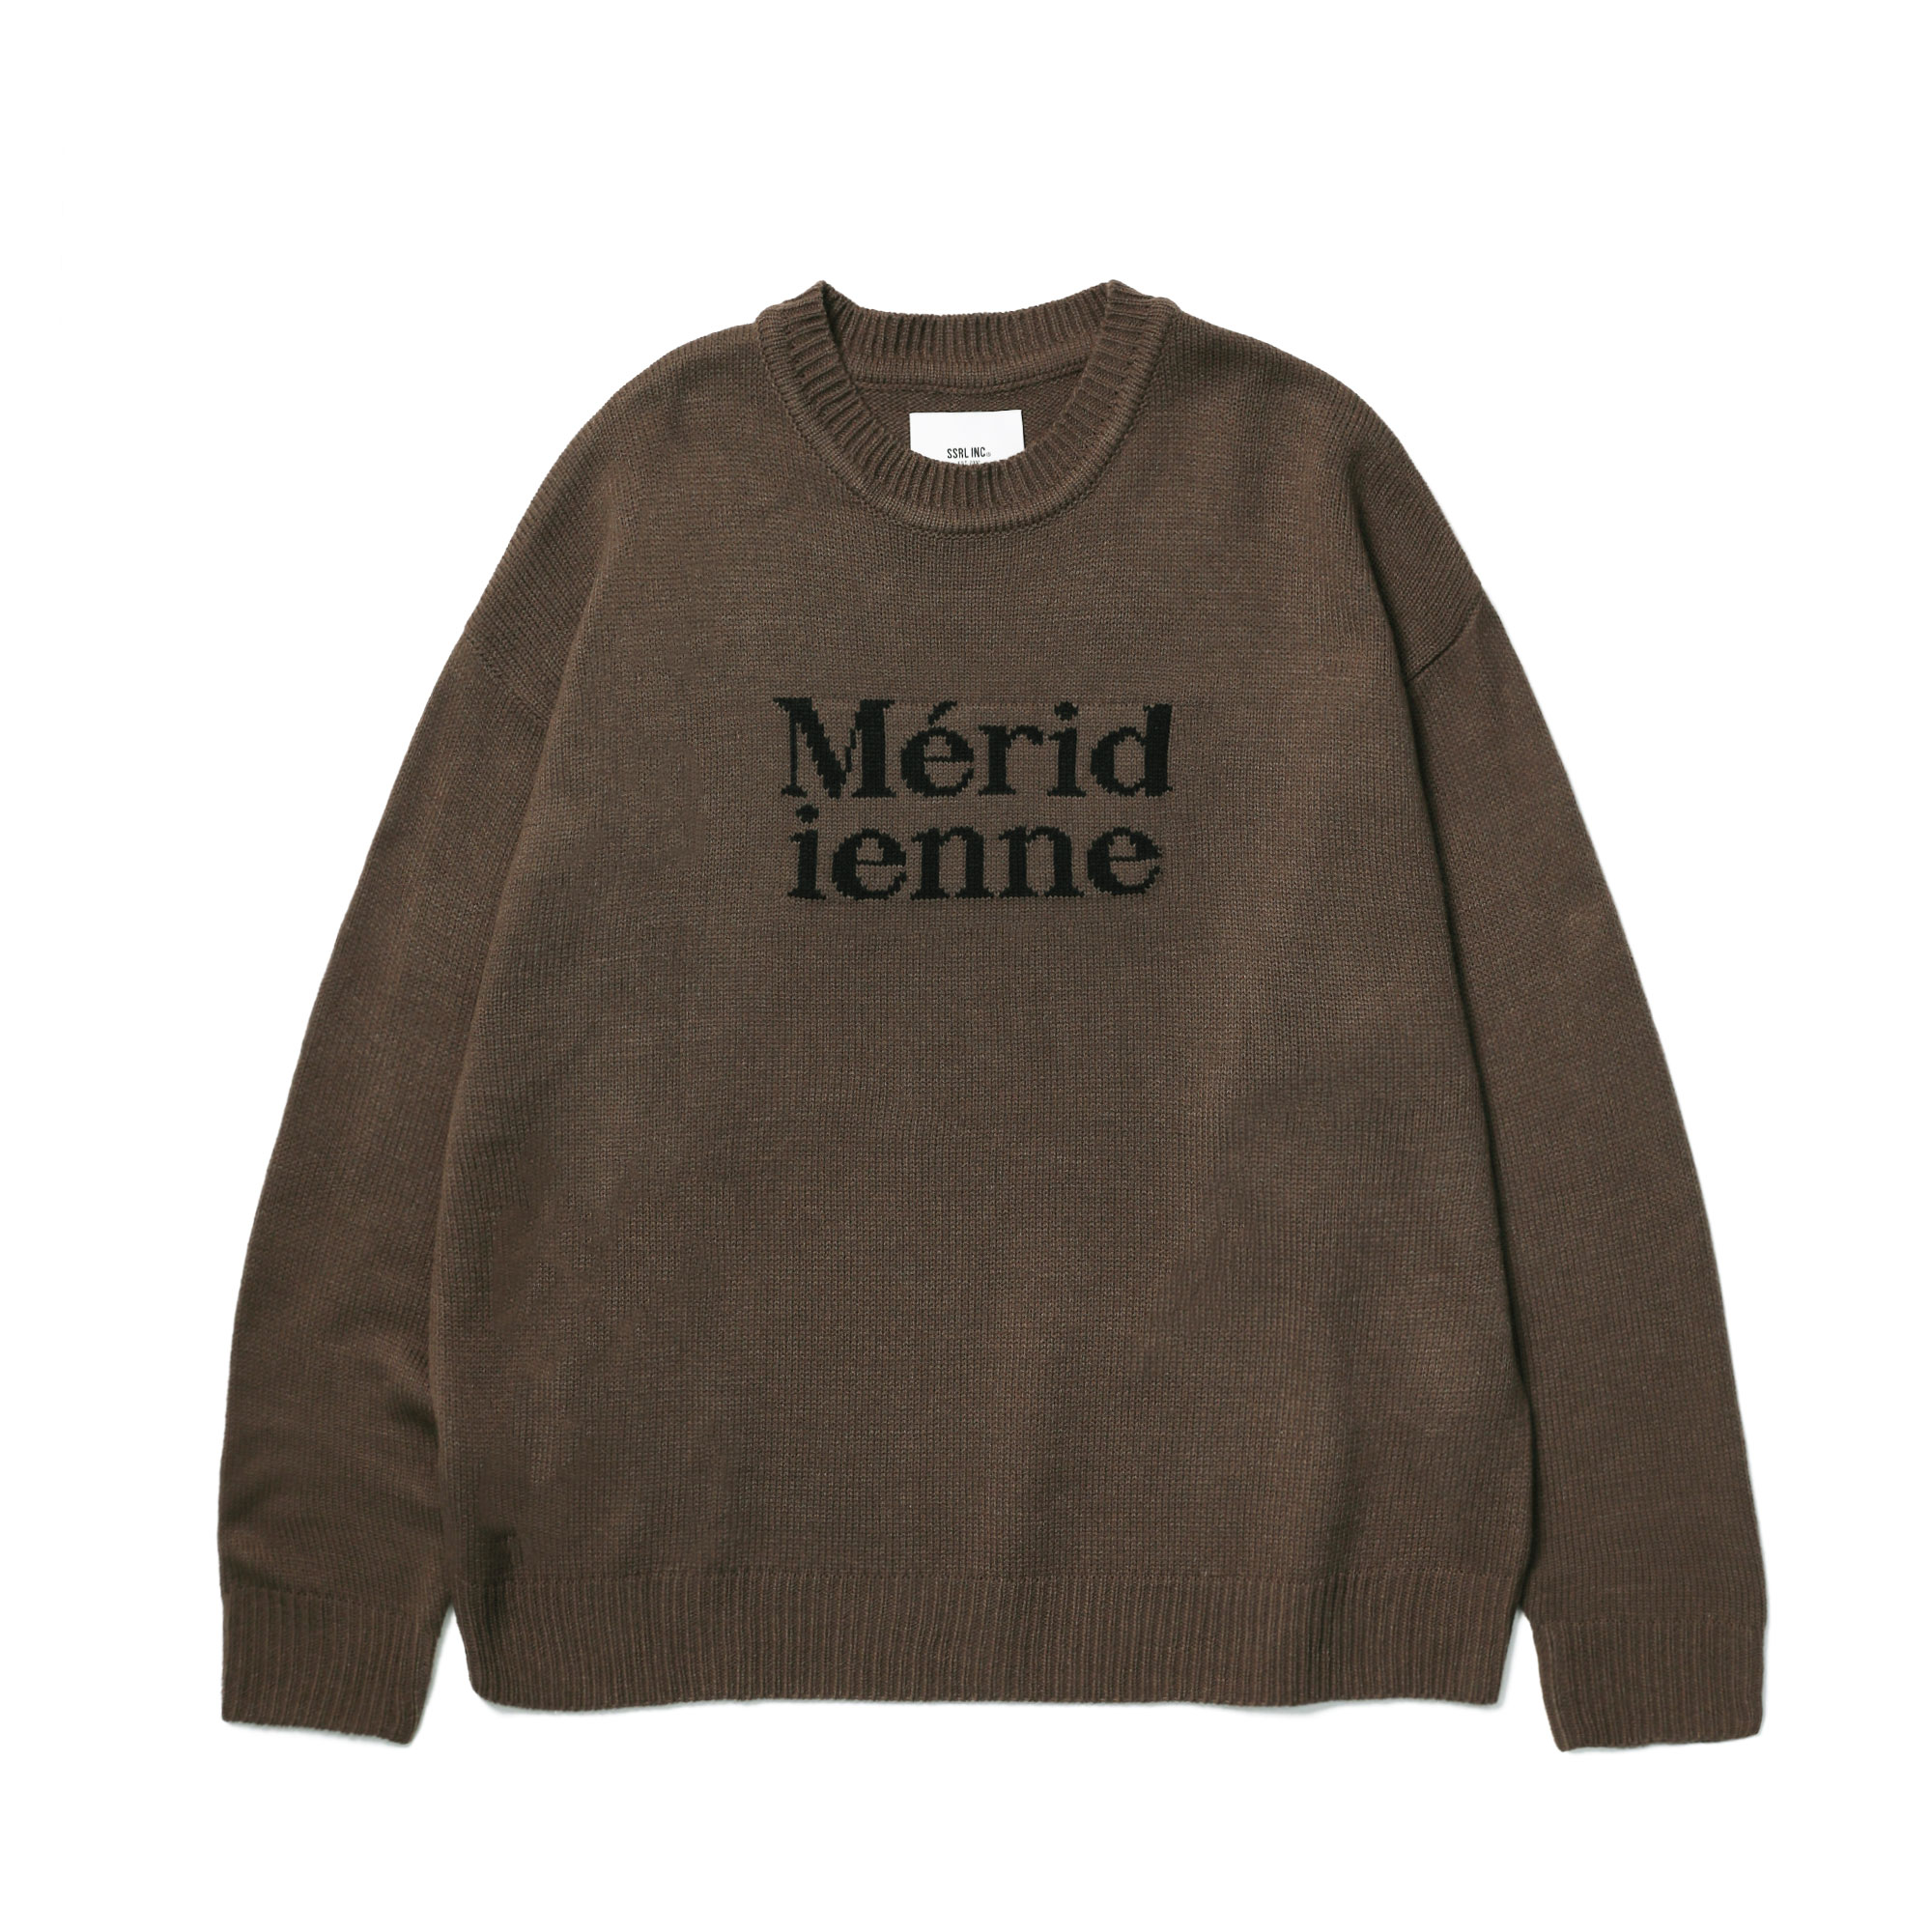 meridienne crew neck knit / brown